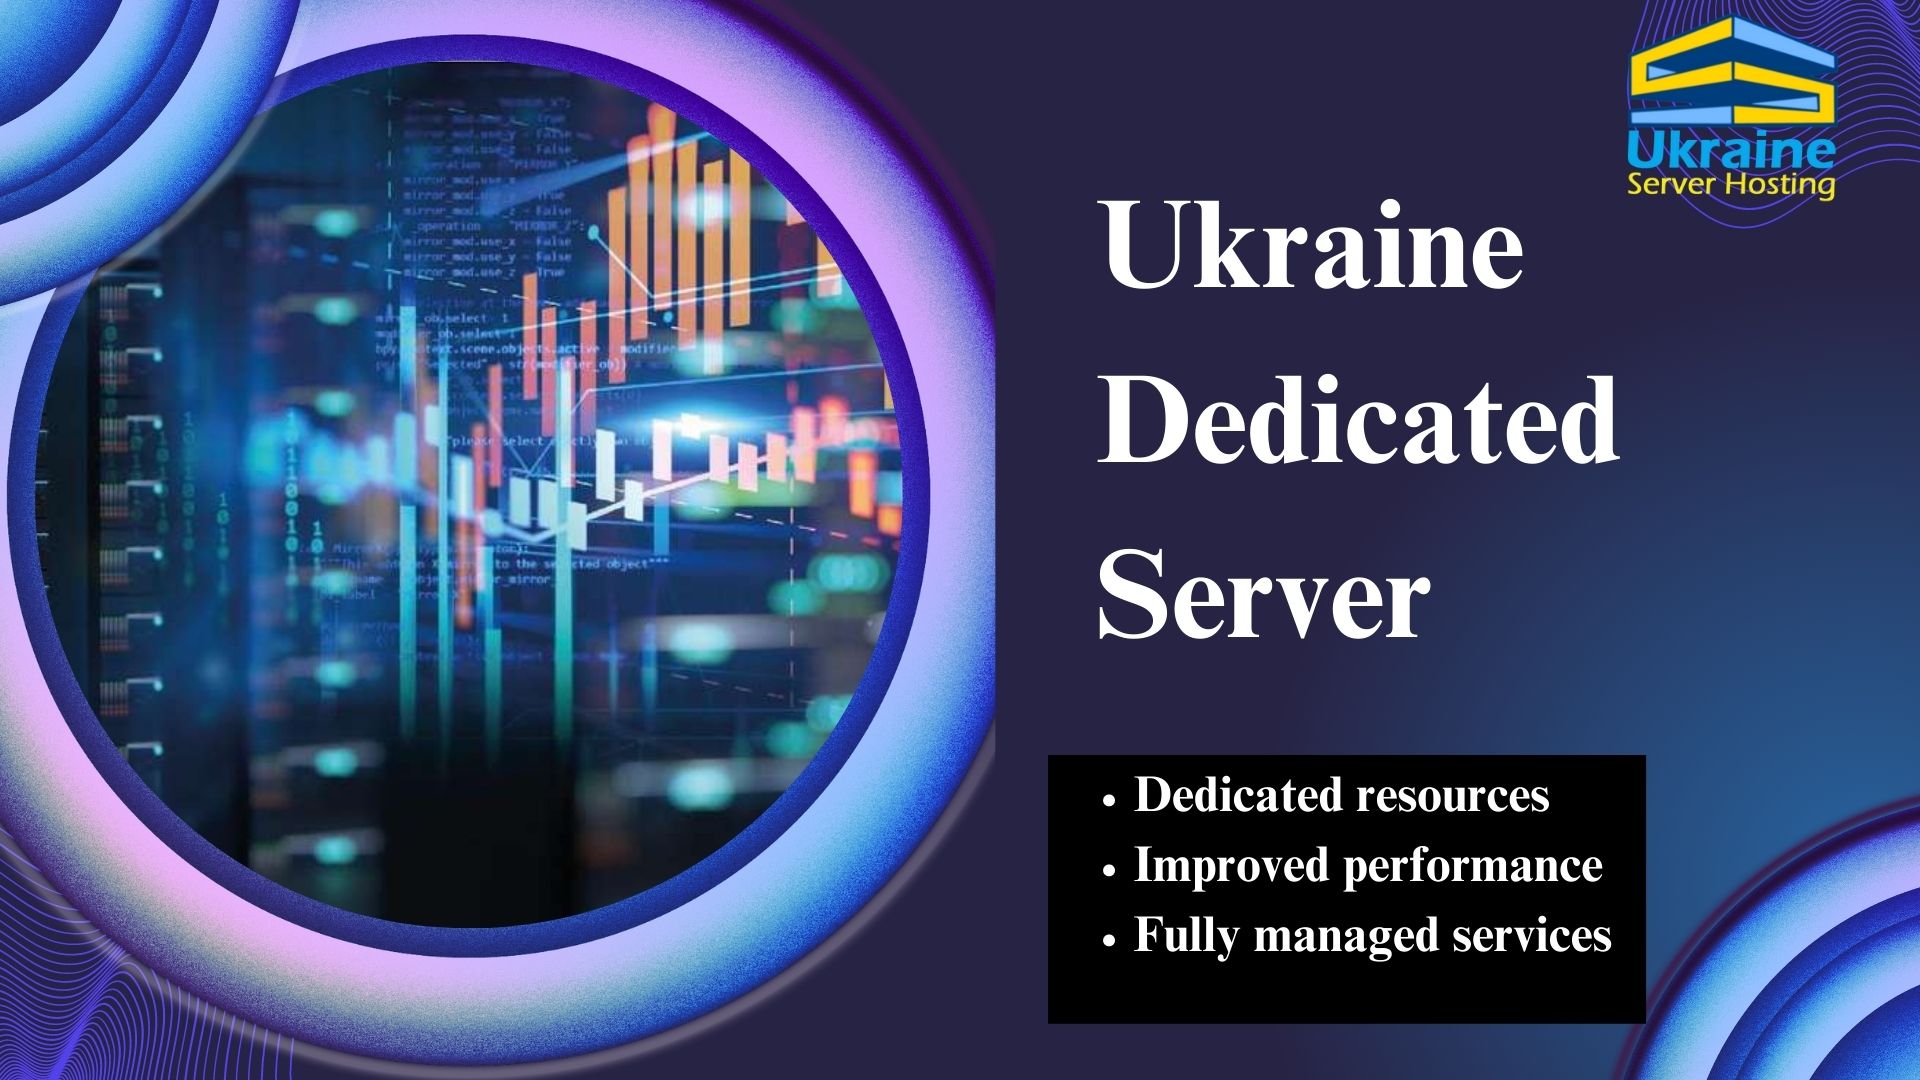 Get Ready for the unique Ukraine VPS Server sponsored event powered by Ukraine Server Hosting., Online Event